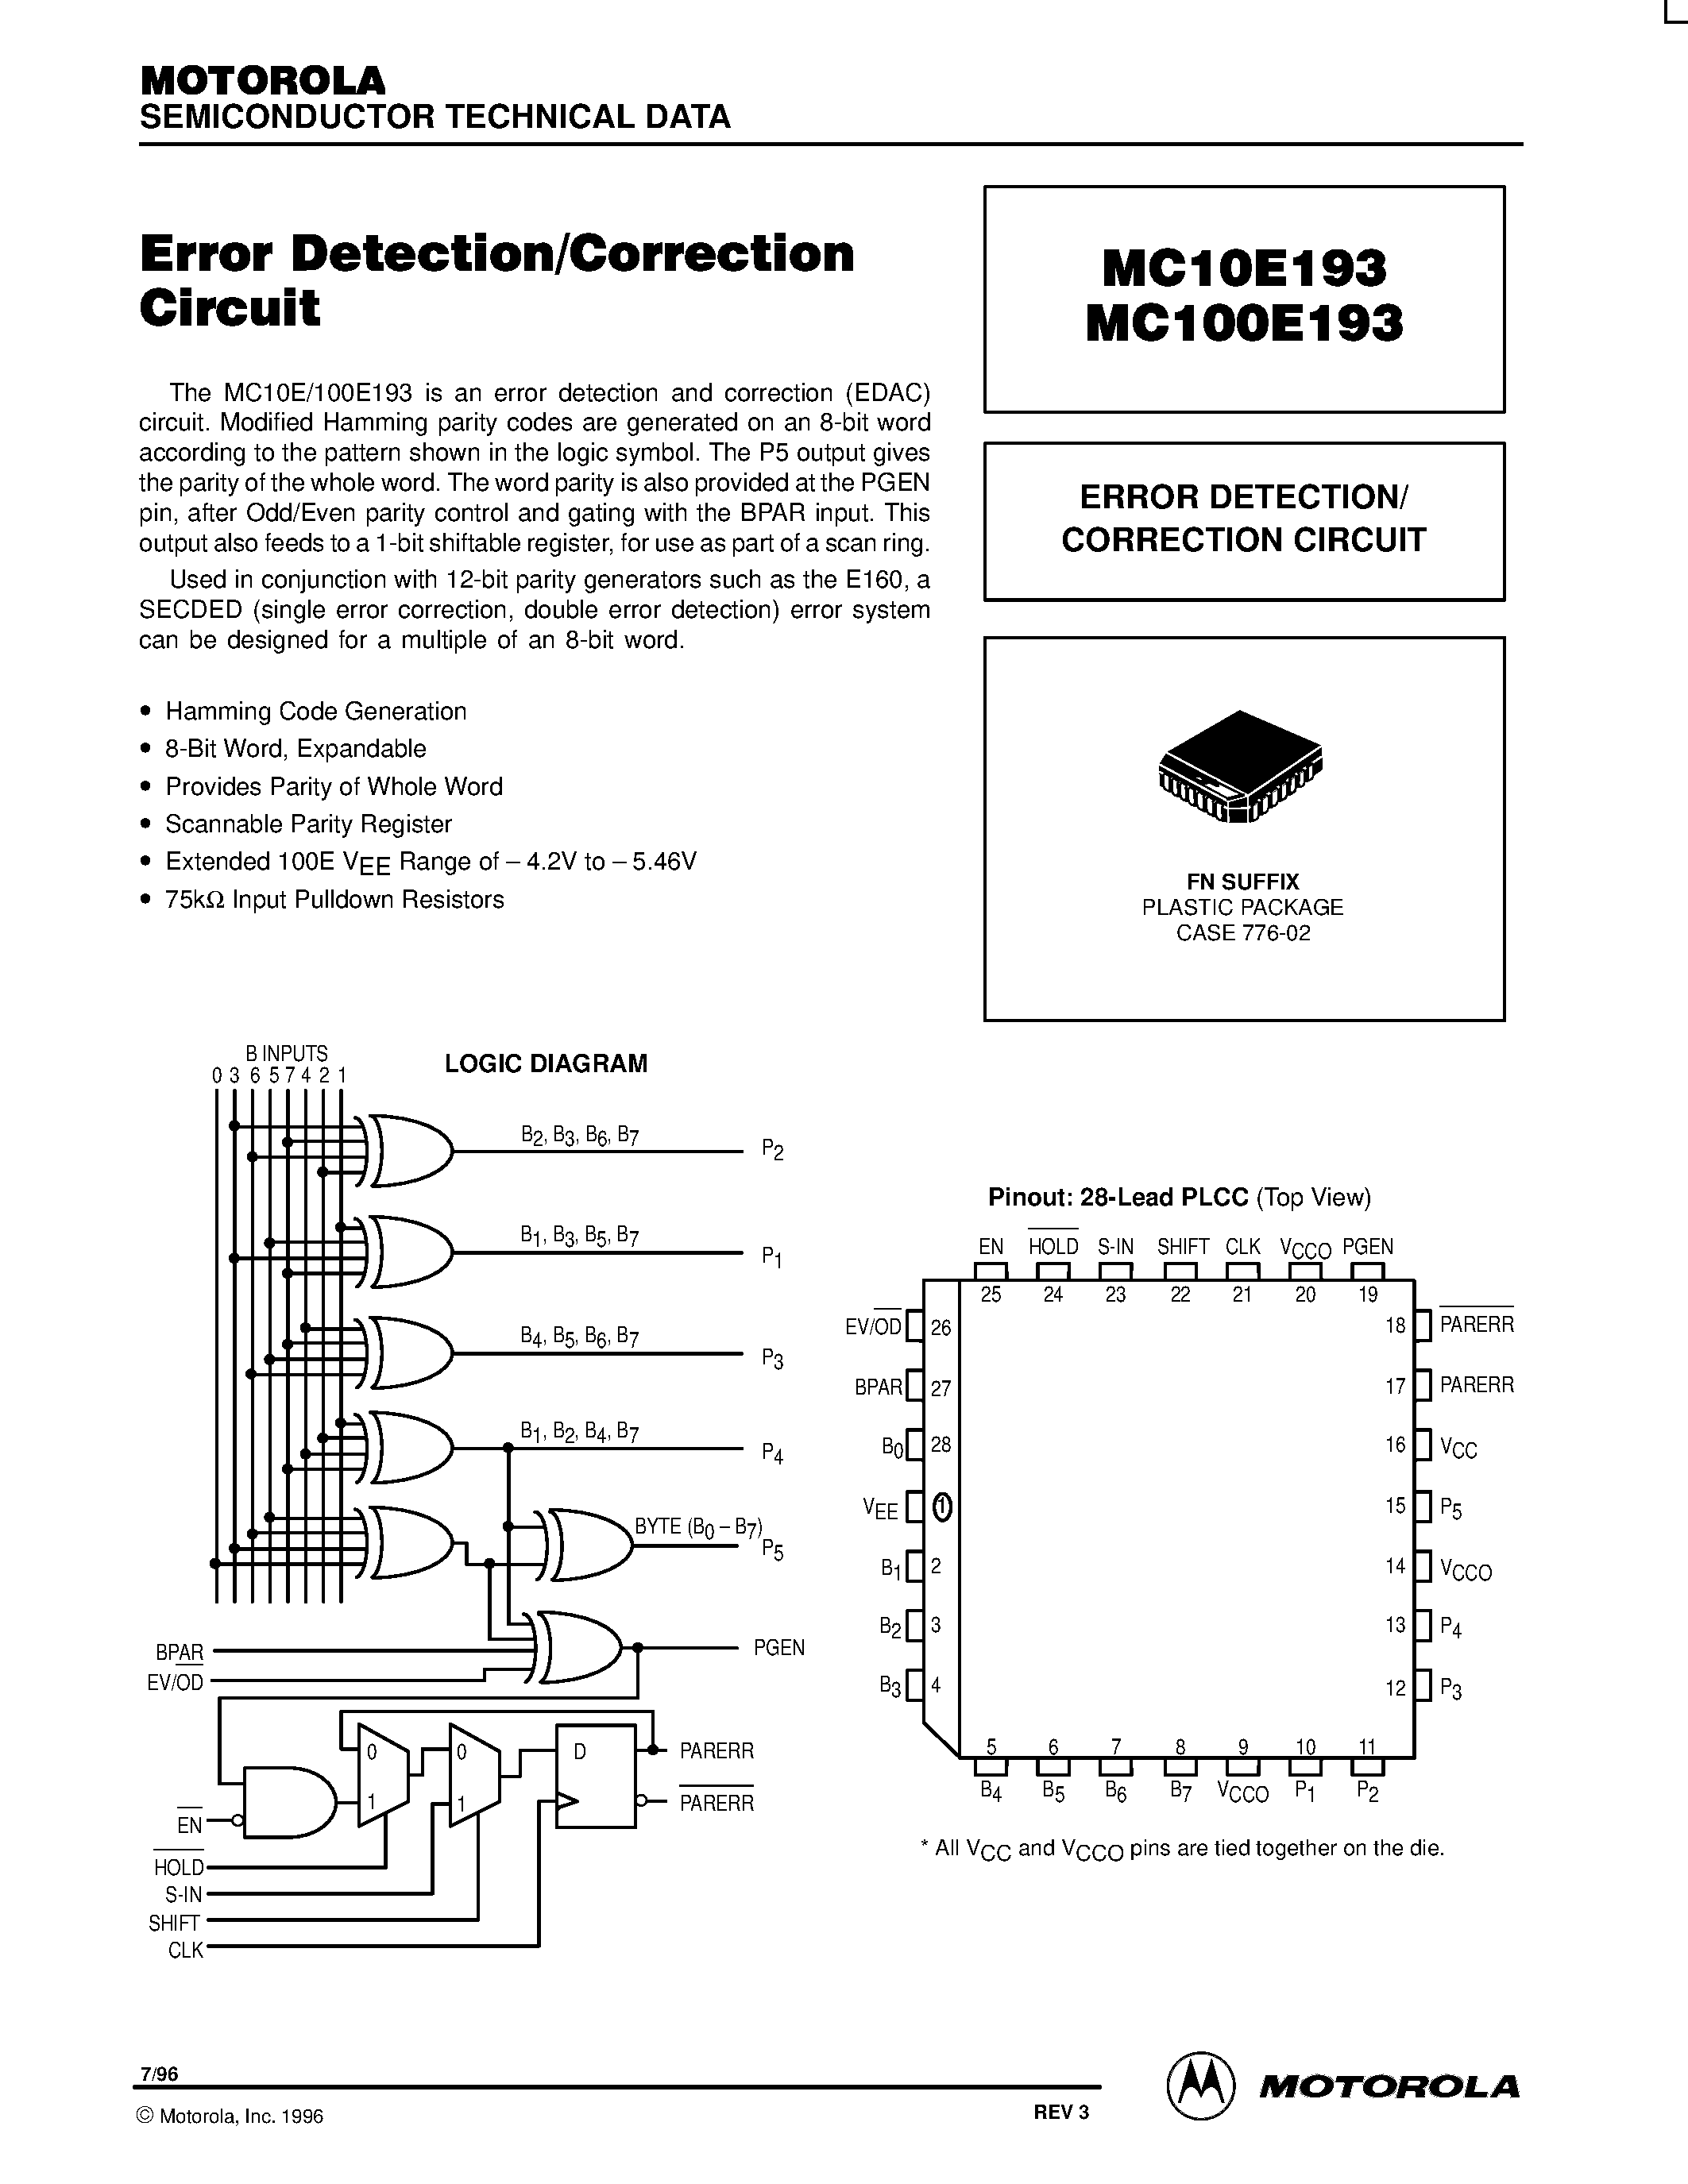 Datasheet MC100E193 - ERROR DETECTION/ CORRECTION CIRCUIT page 1